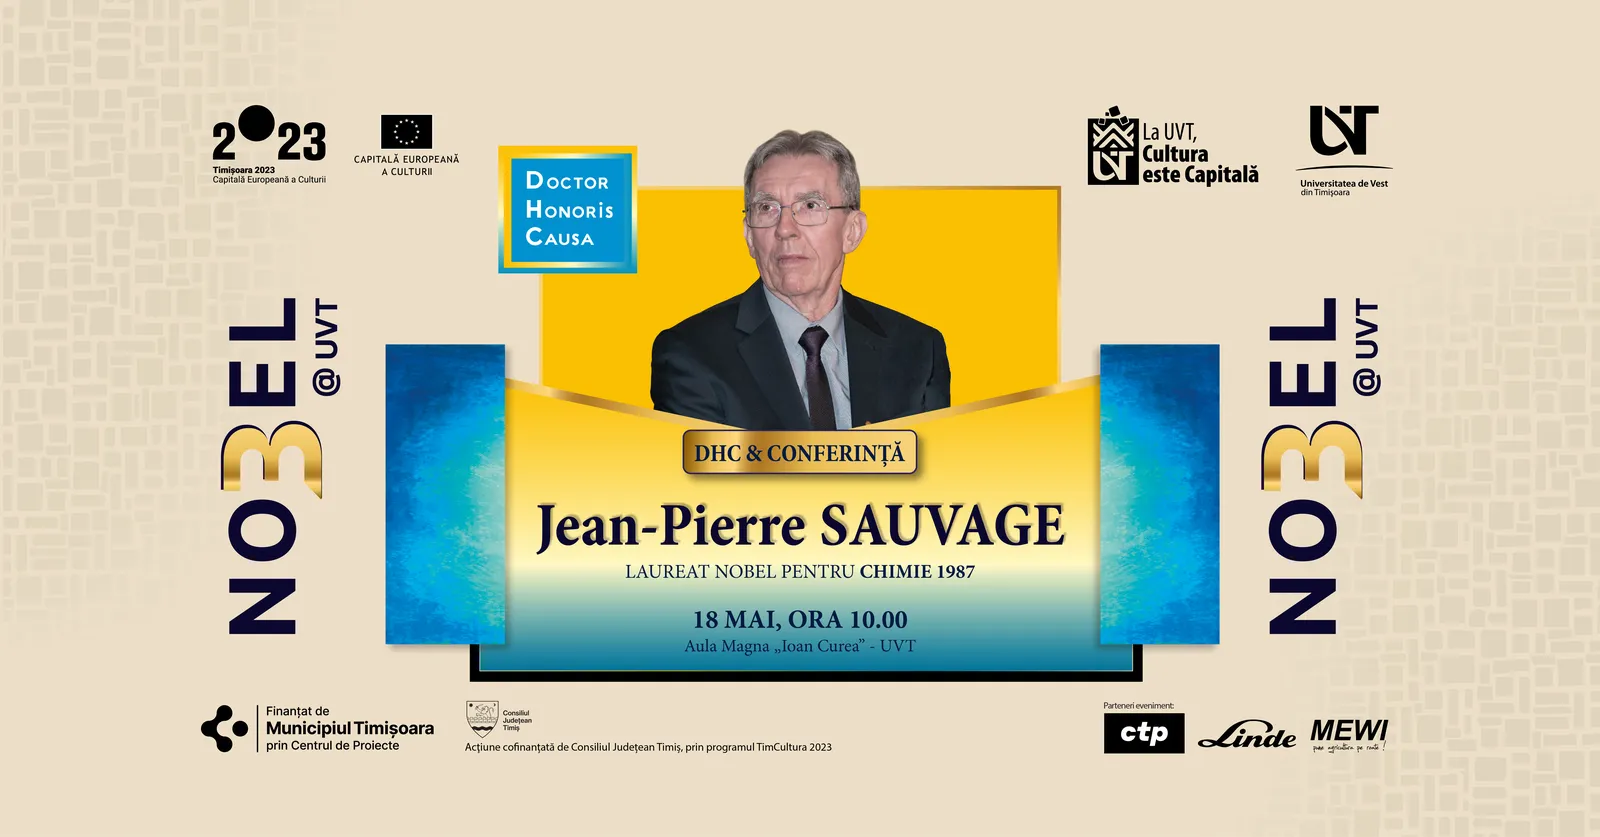 Ideas that change the world - Jean-Pierre Sauvage